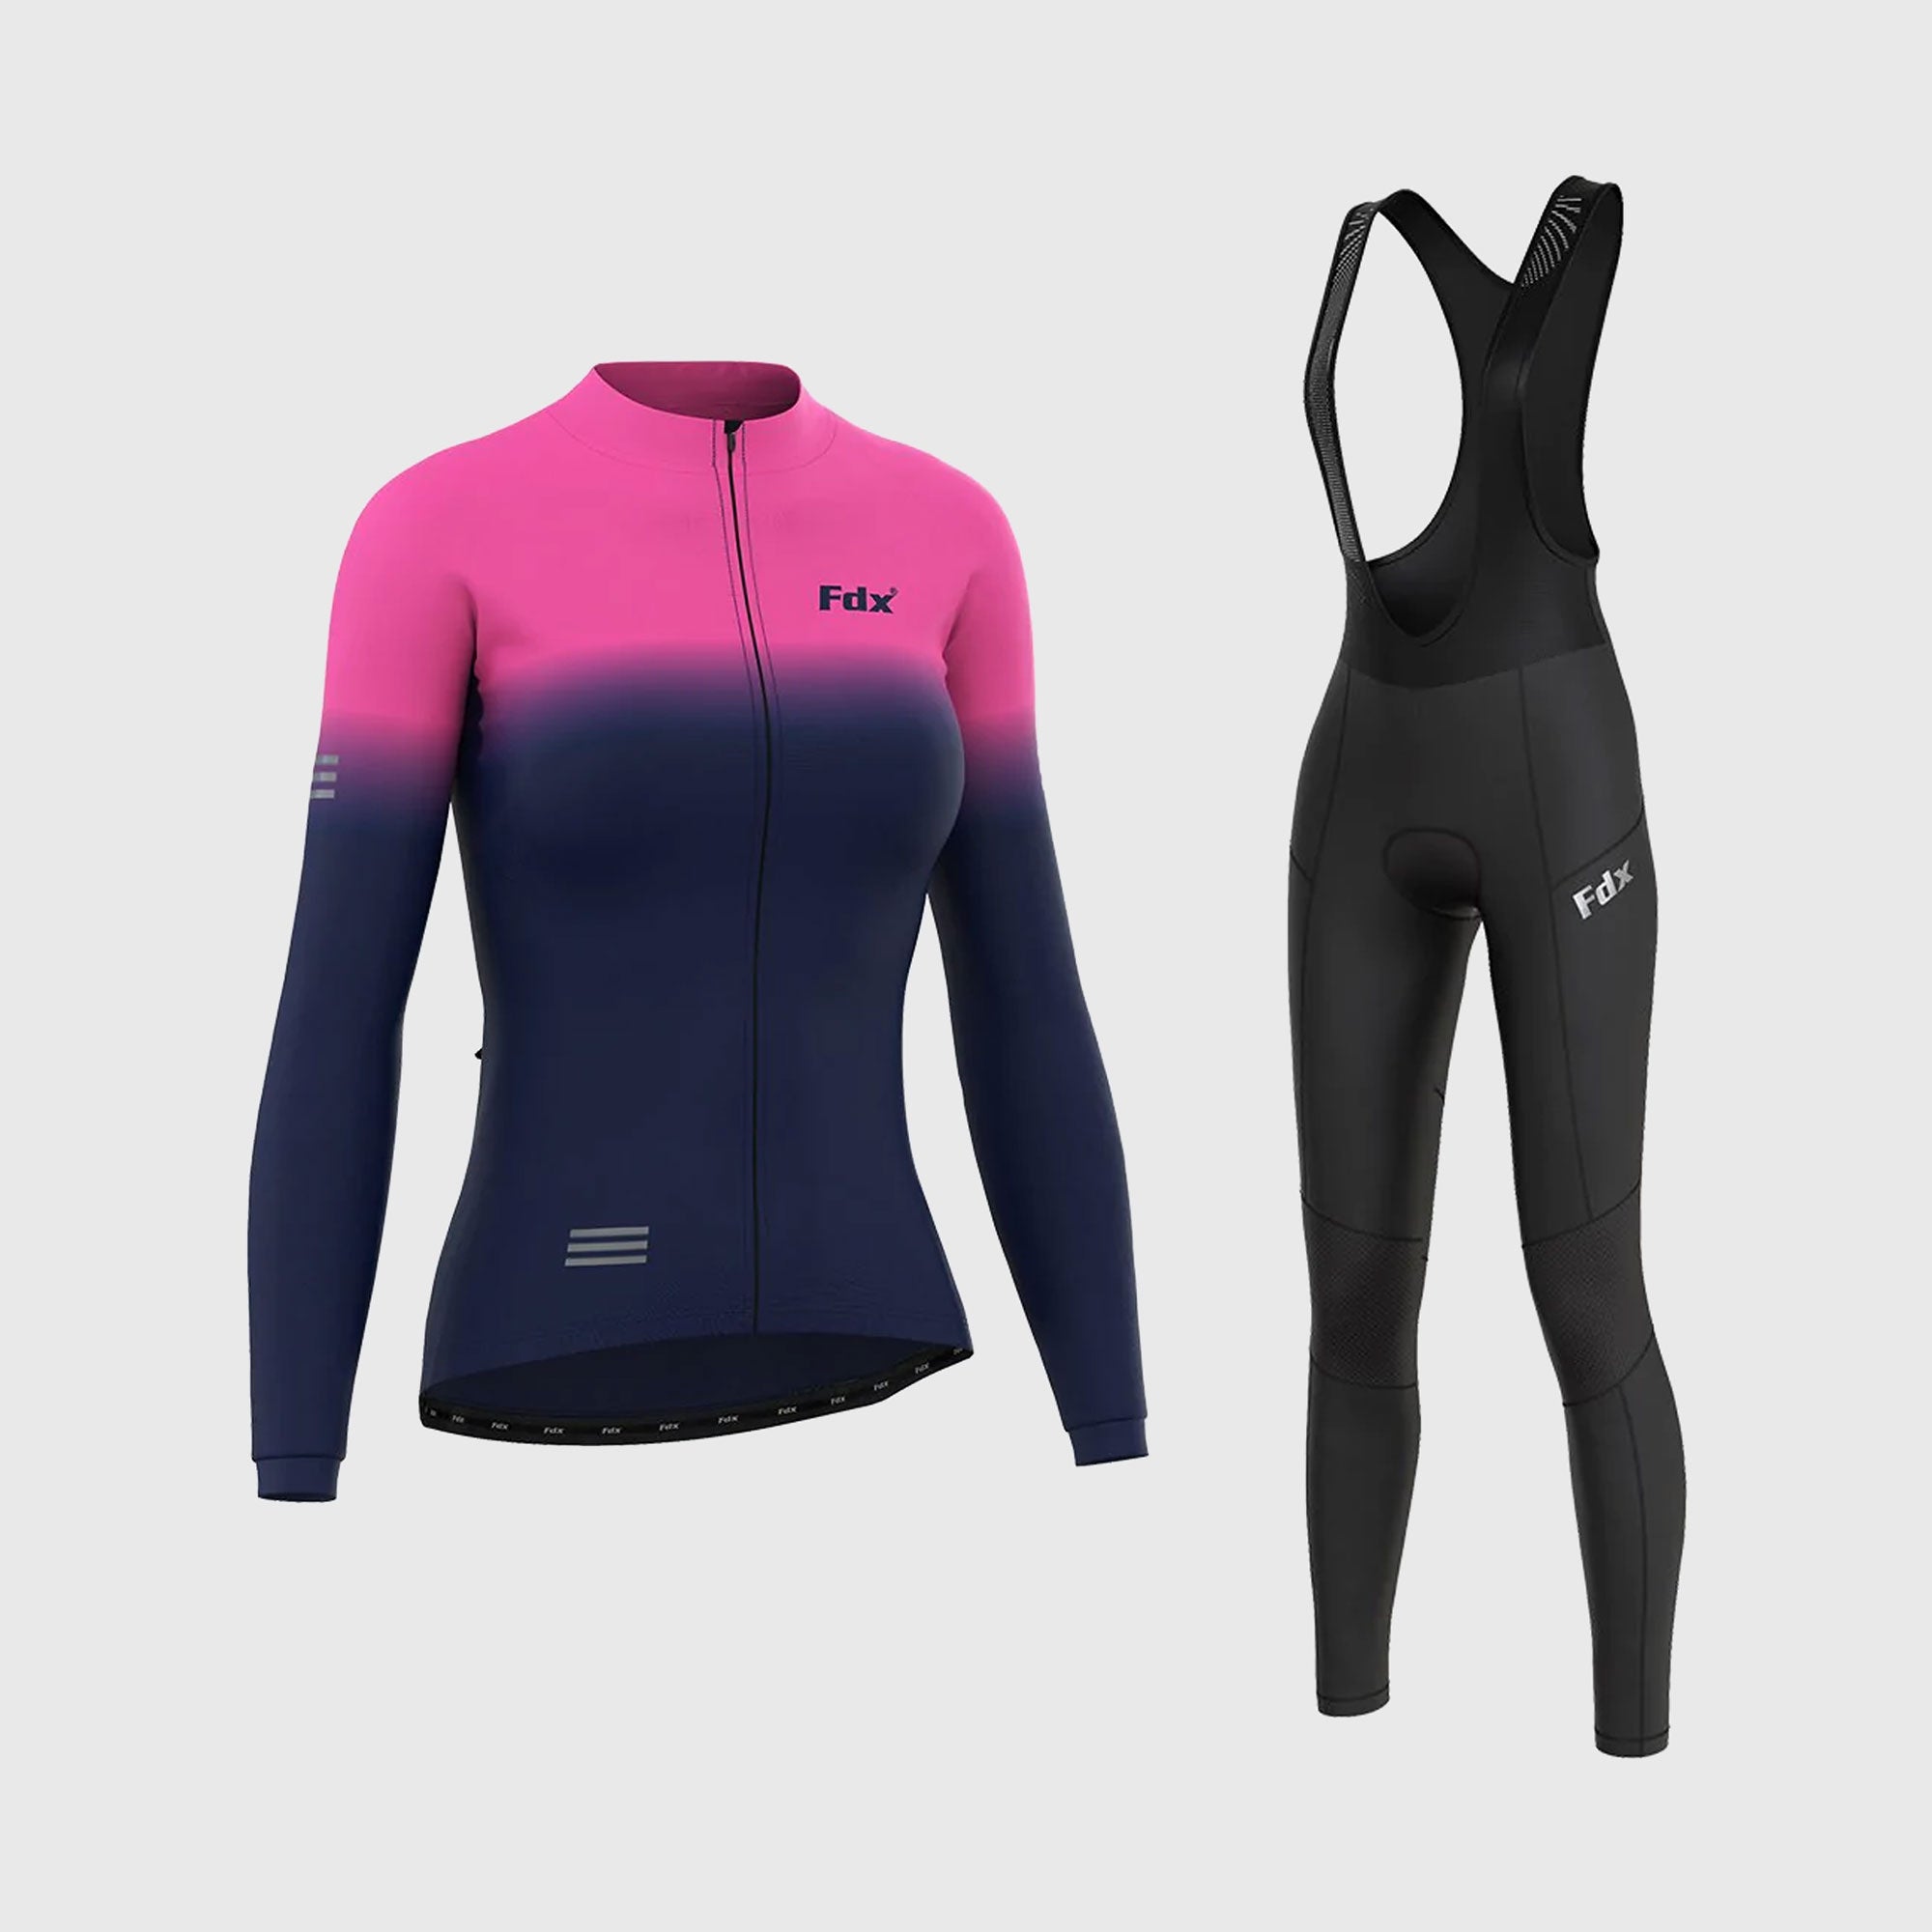 Fdx Women's Set Duo Thermal Long Sleeve Cycling Jersey & Bib Tights - Pink / Blue